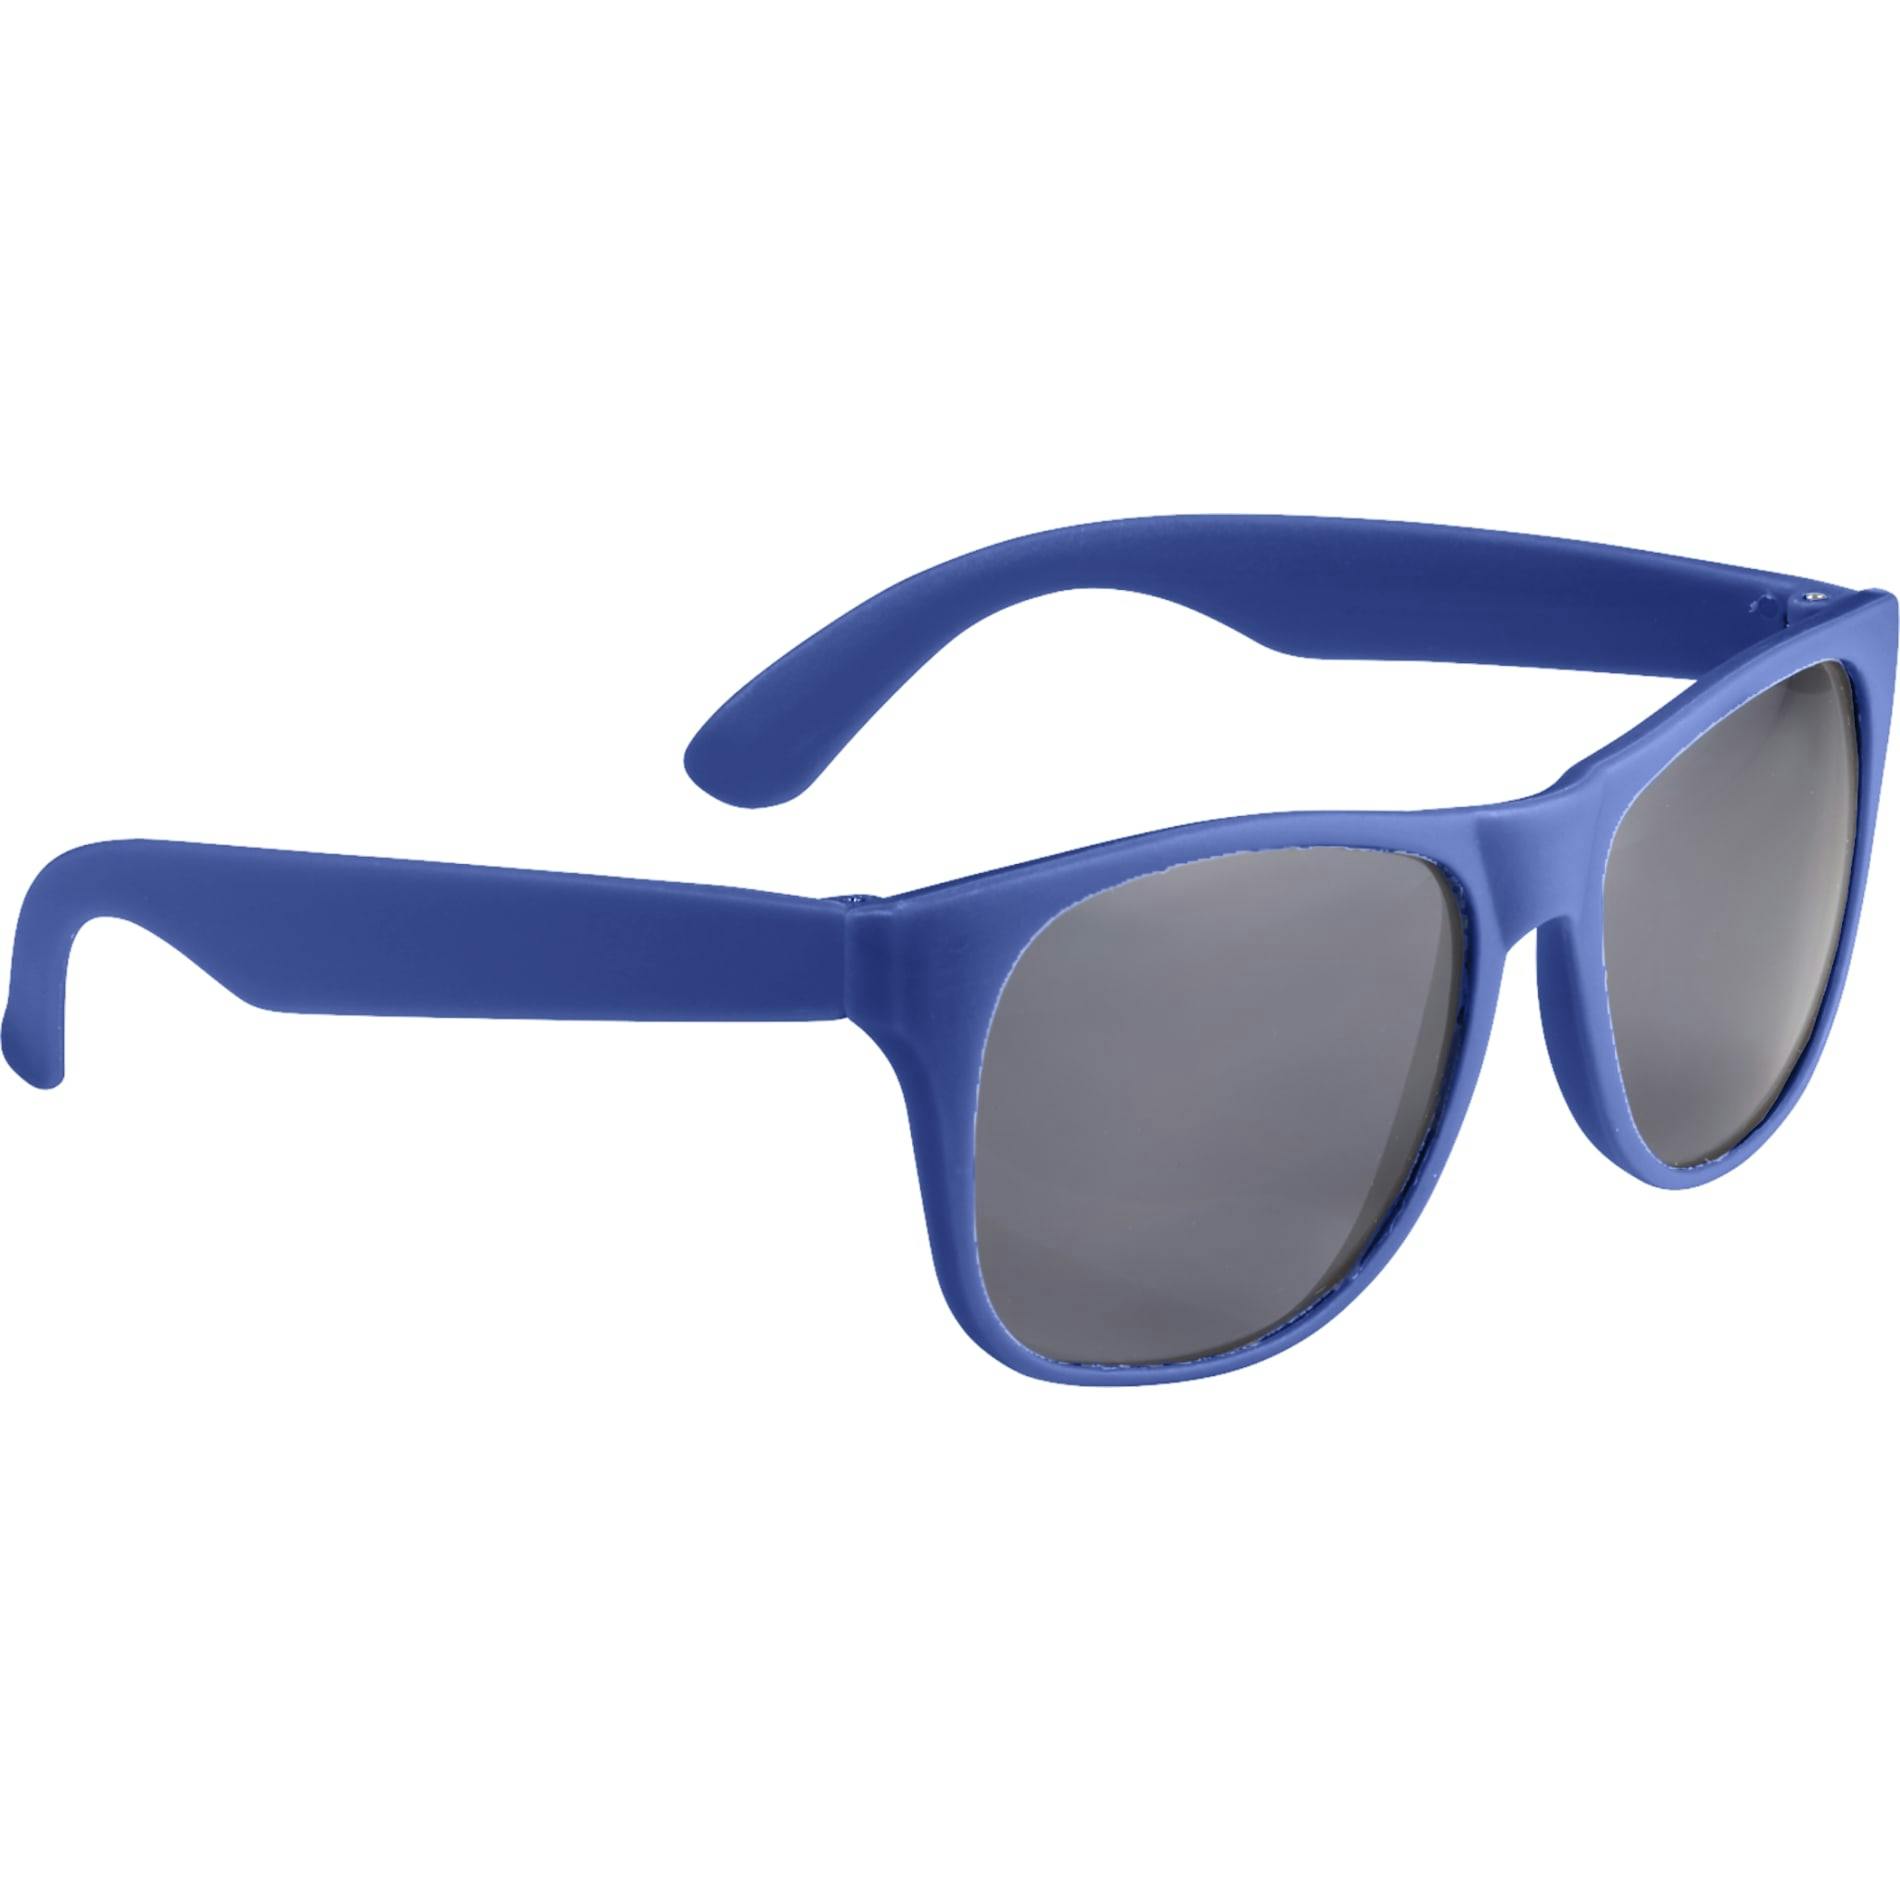 Solid Retro Sunglasses - additional Image 1